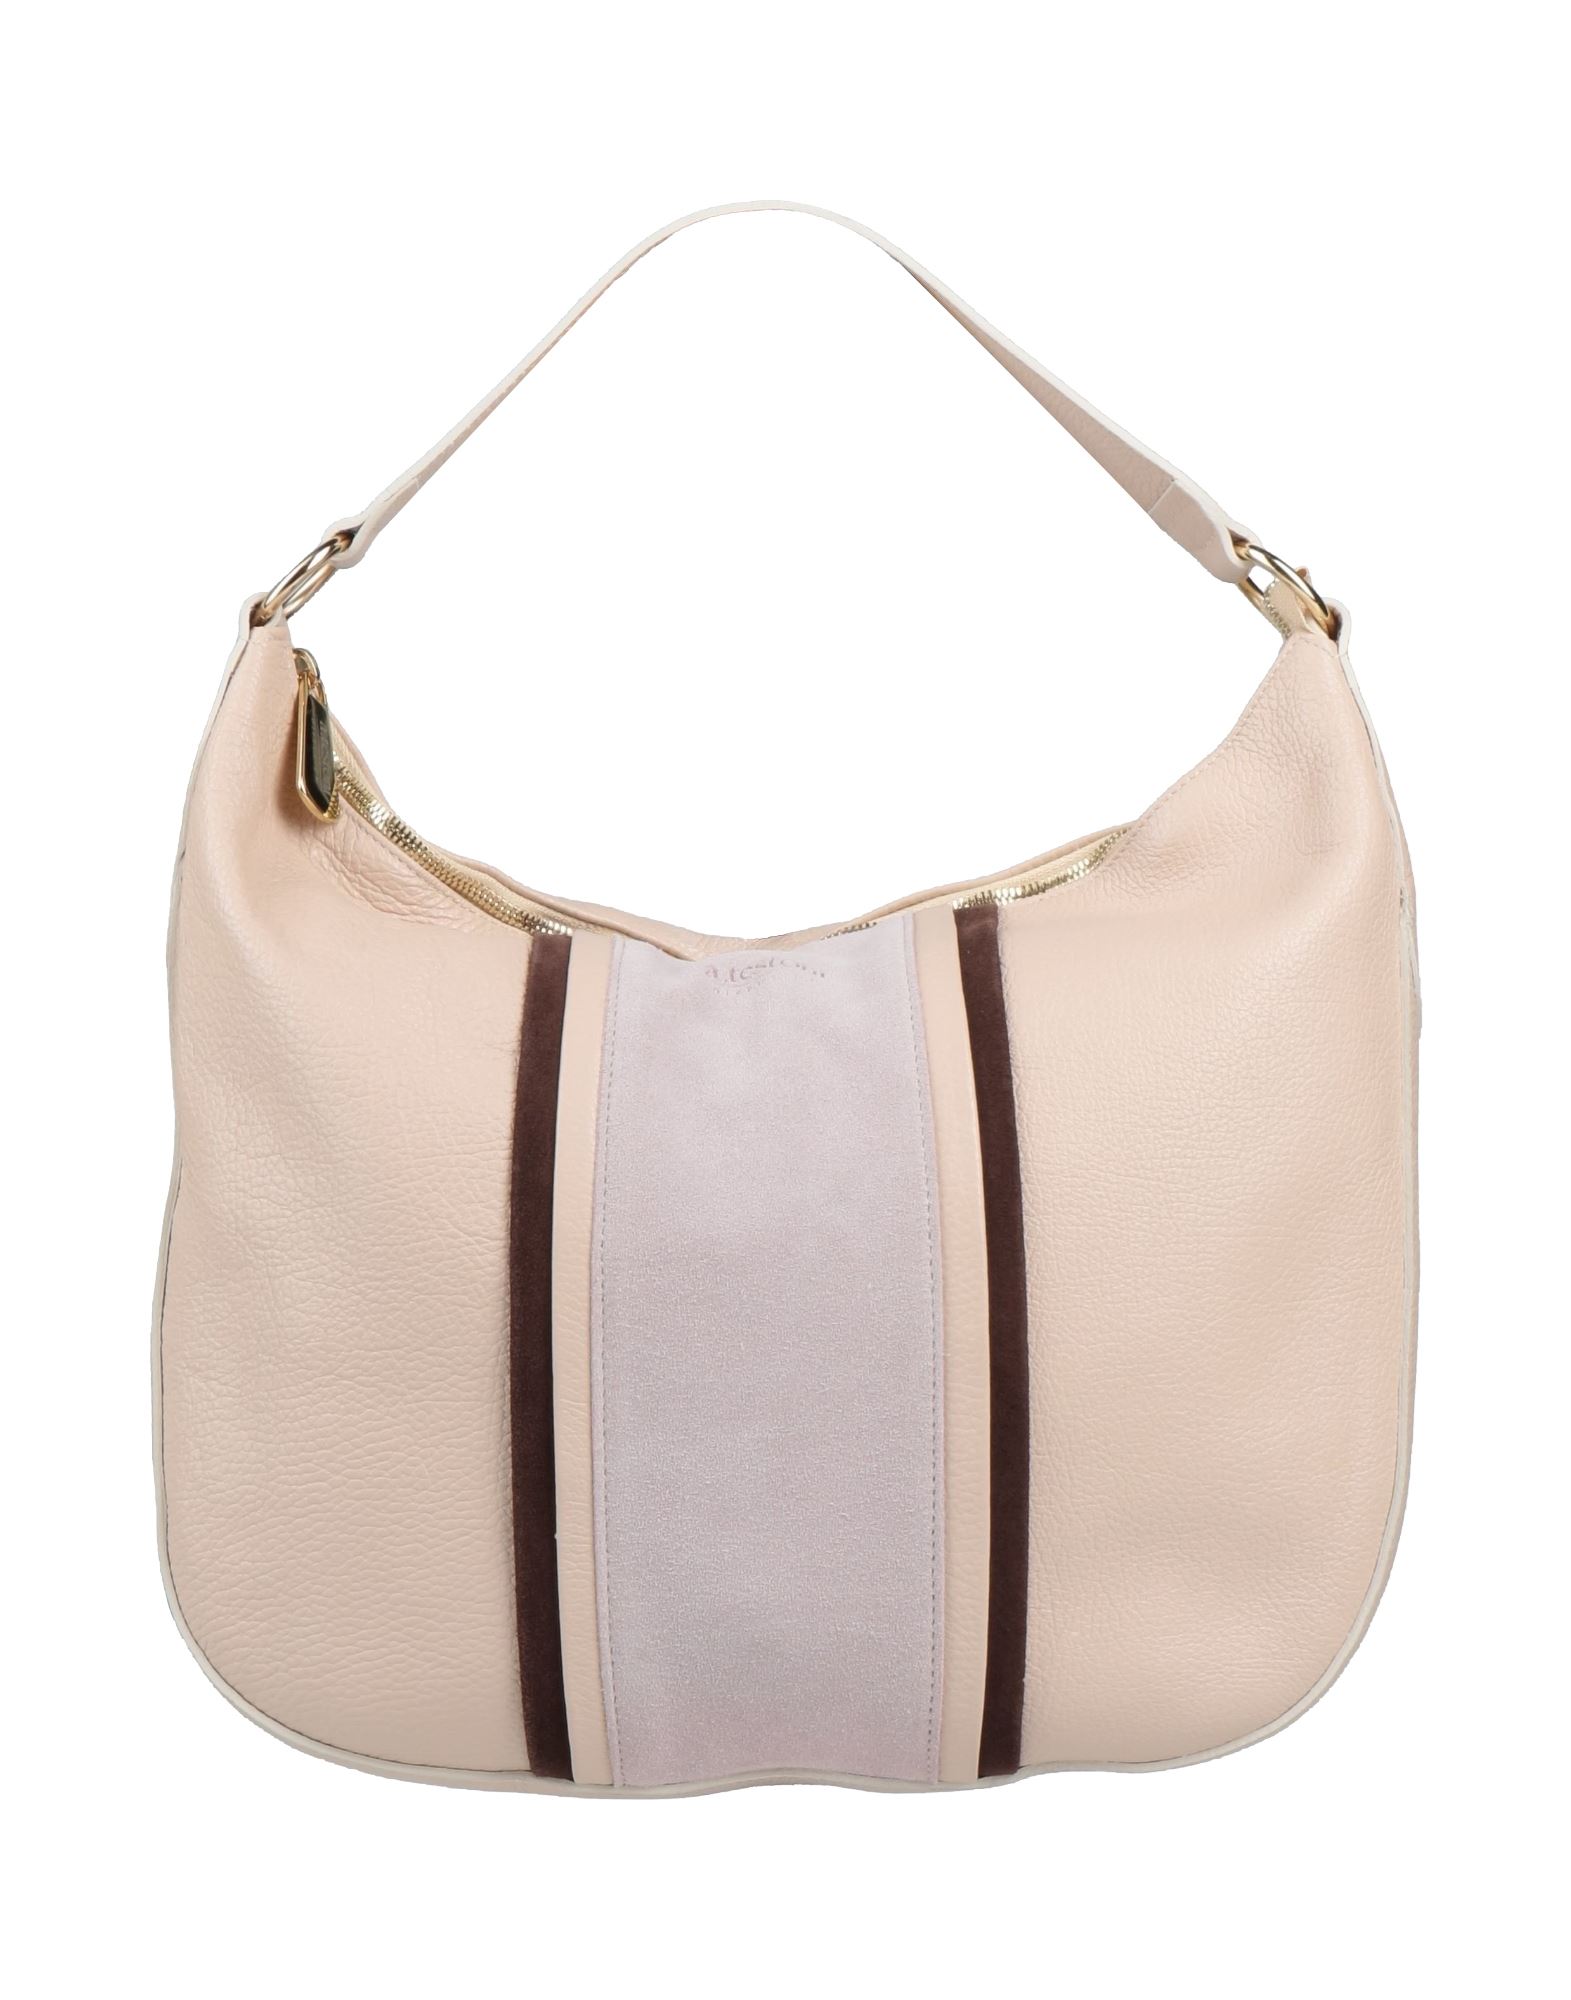 A.testoni Handbags In Blush